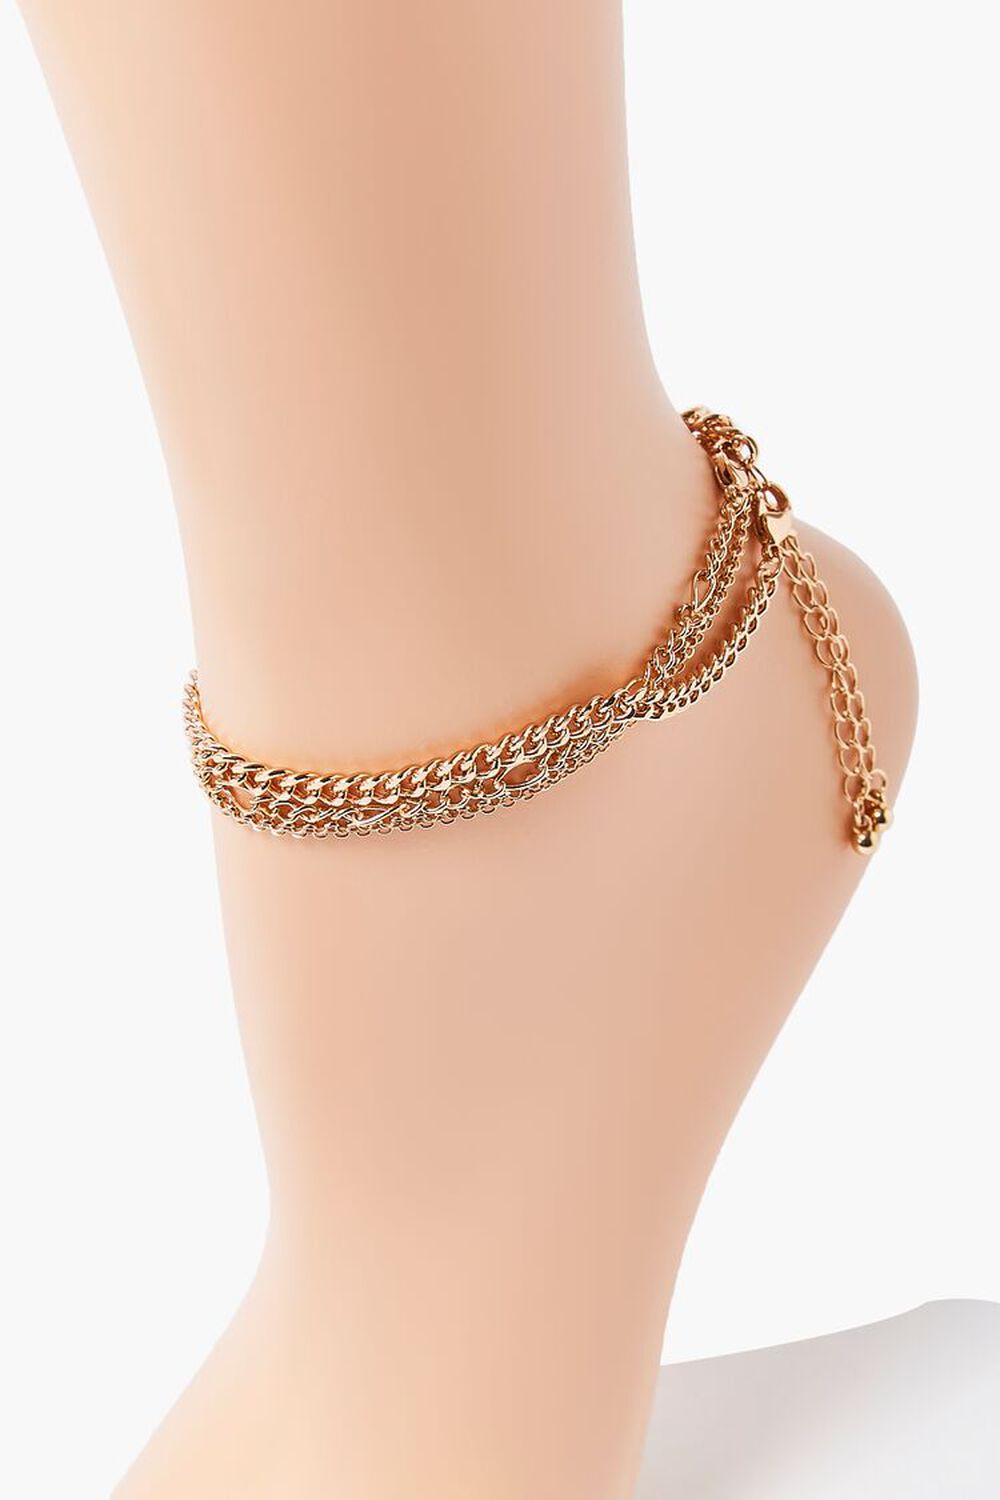 GOLD Chain Anklet Set, image 1